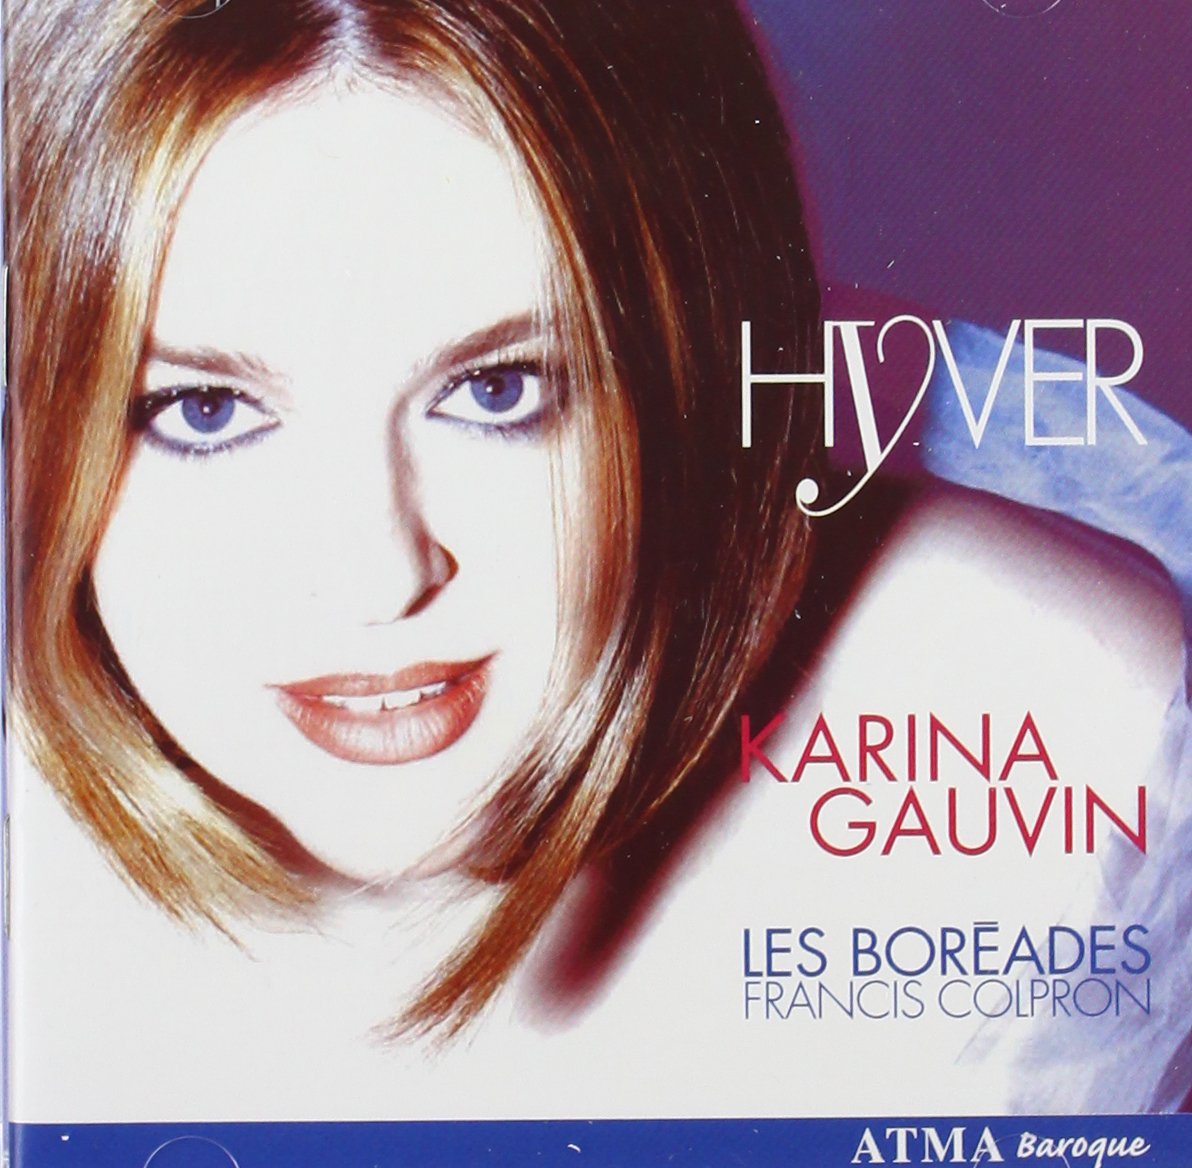 Boismortier; Clerambault et al. - Hyver - Cantatas for soprano solo - Ens. Les Boréades